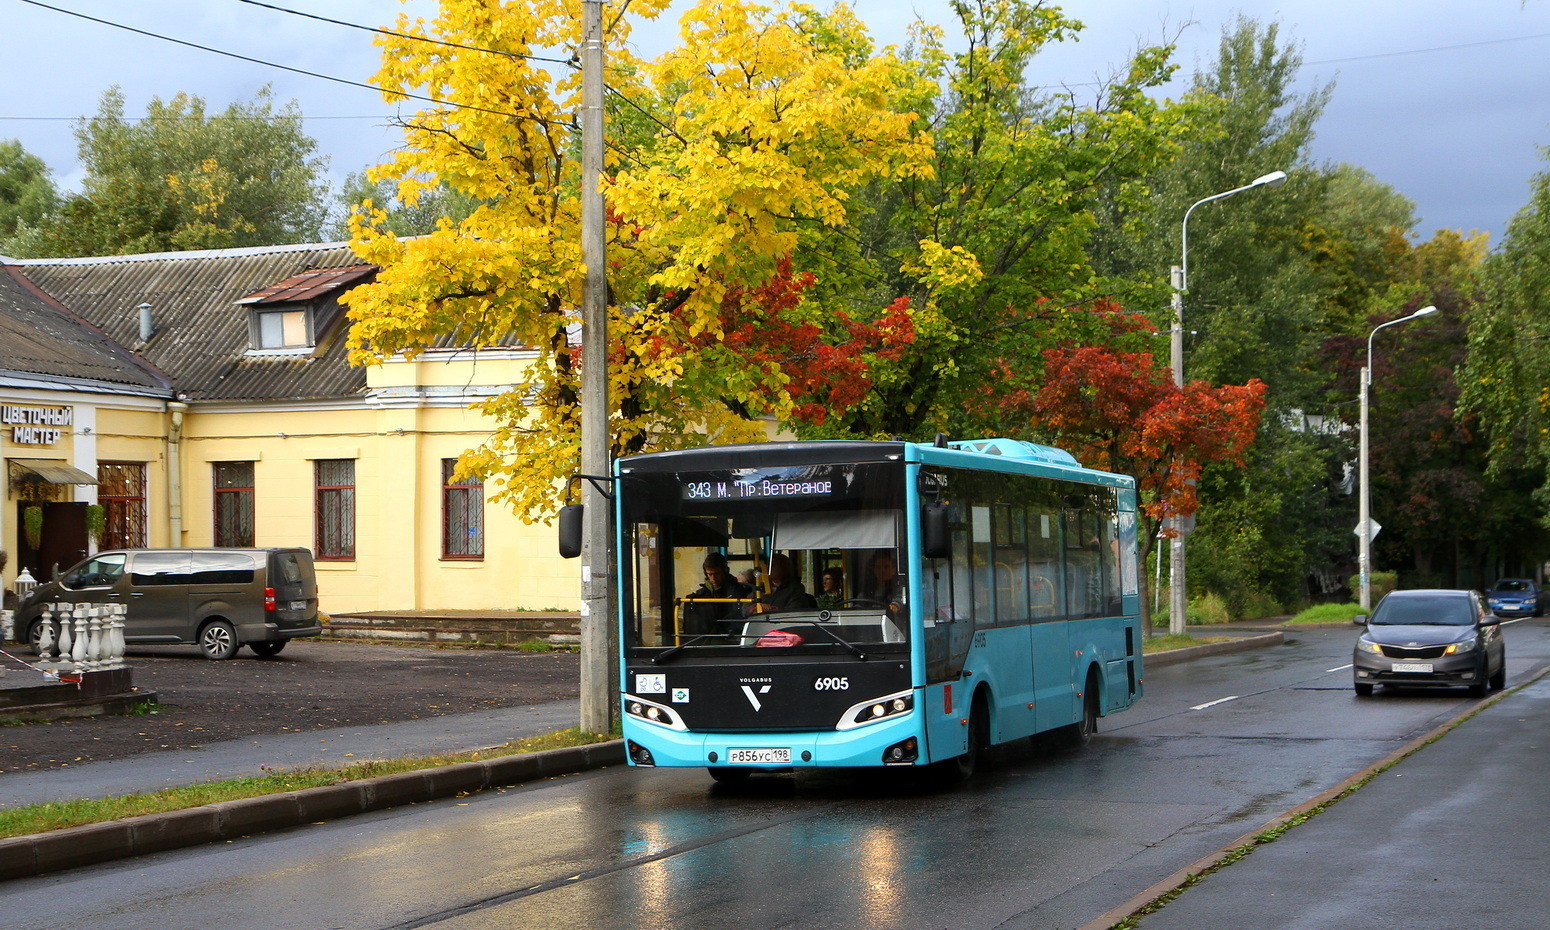 Sankt Petersburg, Volgabus-4298.G4 (LNG) Nr 6905